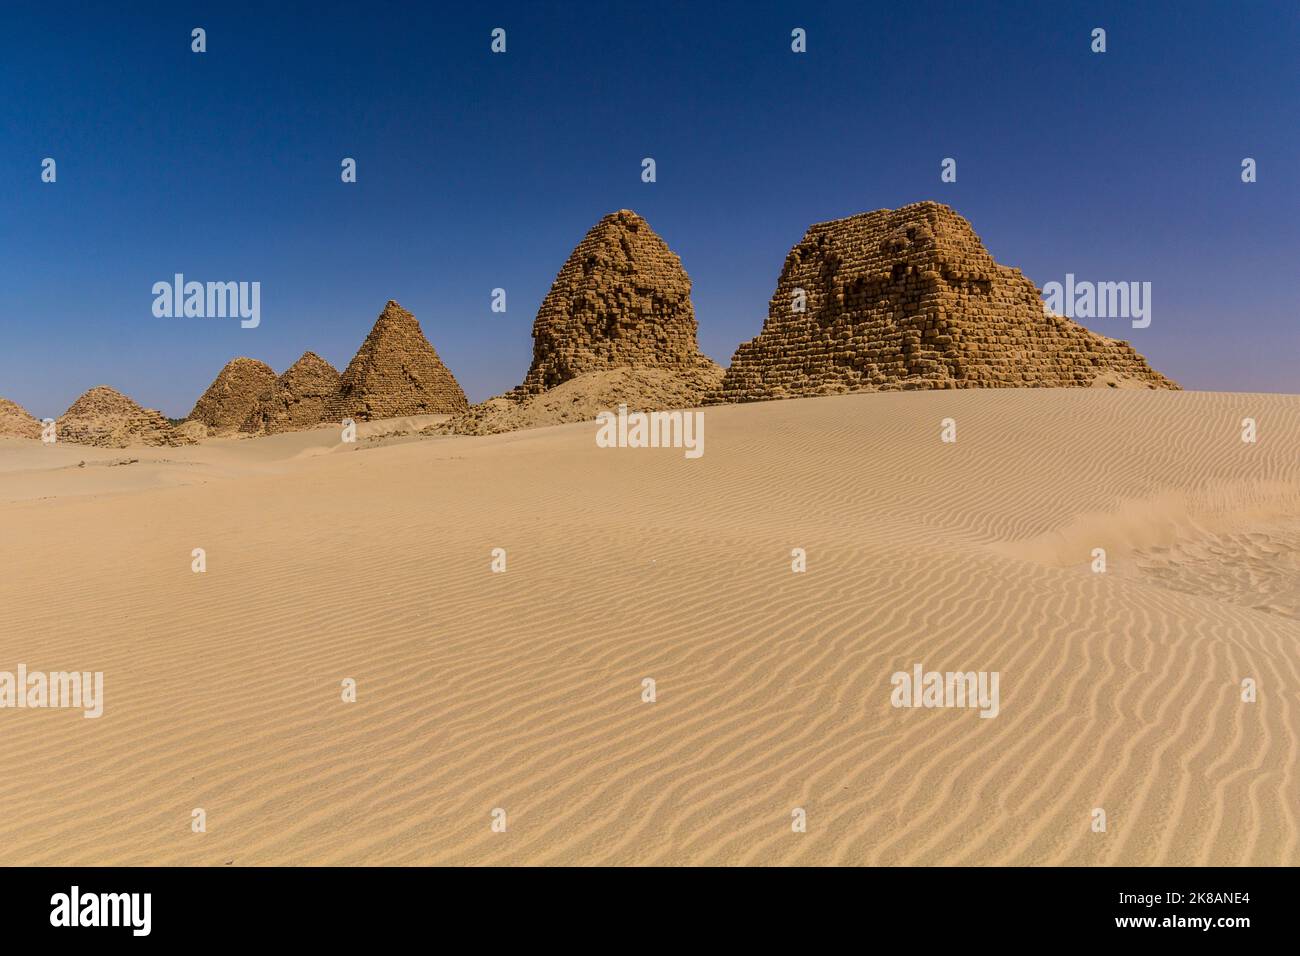 Nuri pyramids in the desert near Karima town, Sudan Stock Photo